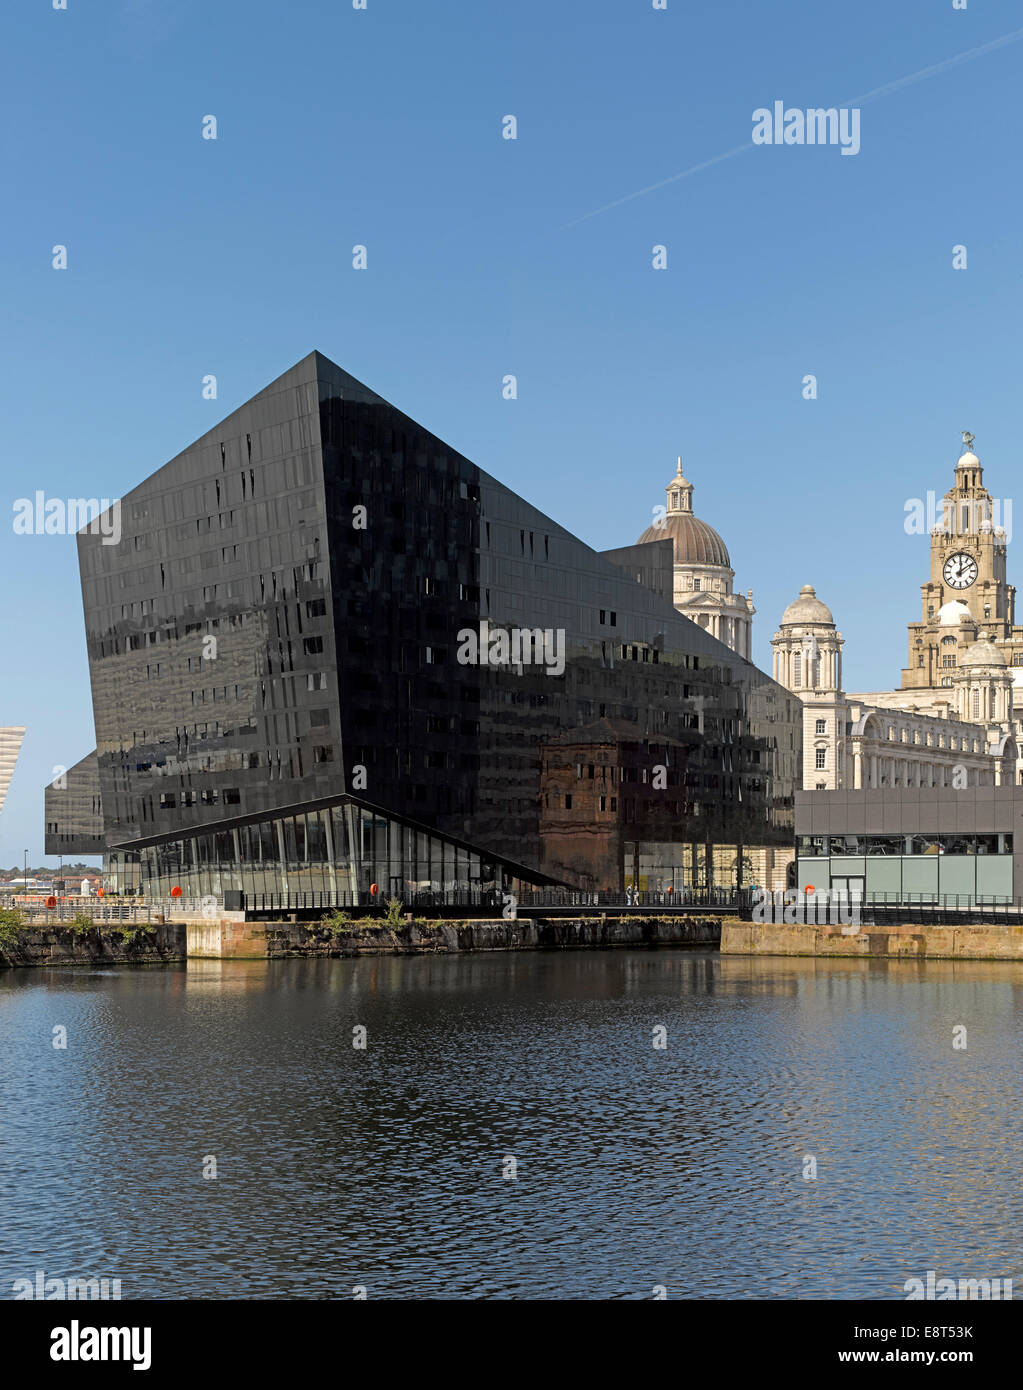 Man Island Development, Liverpool, United Kingdom. Architect: Broadway Malyan Limited, 2014. Overall view over docks. Stock Photo